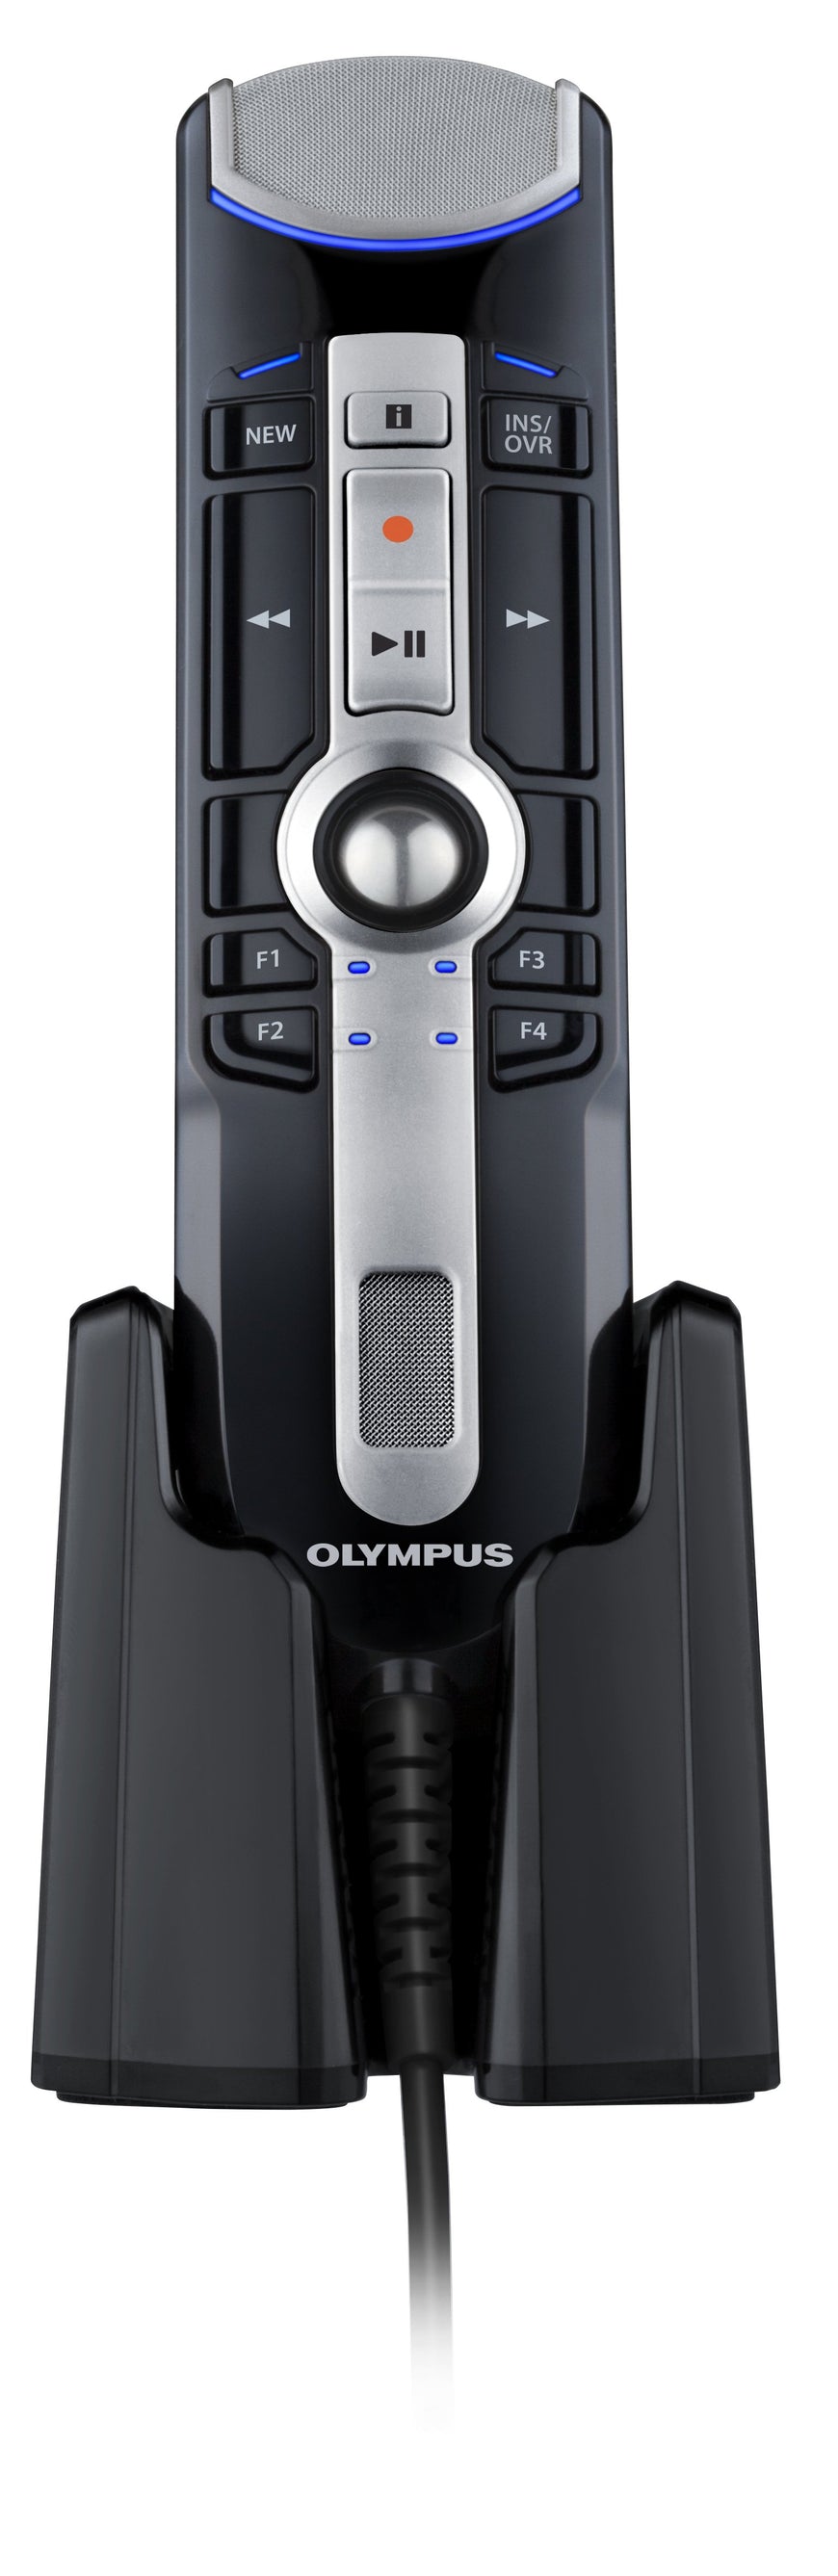 Olympus RecMic II - RM-4015P - Dictation Solutions Australia